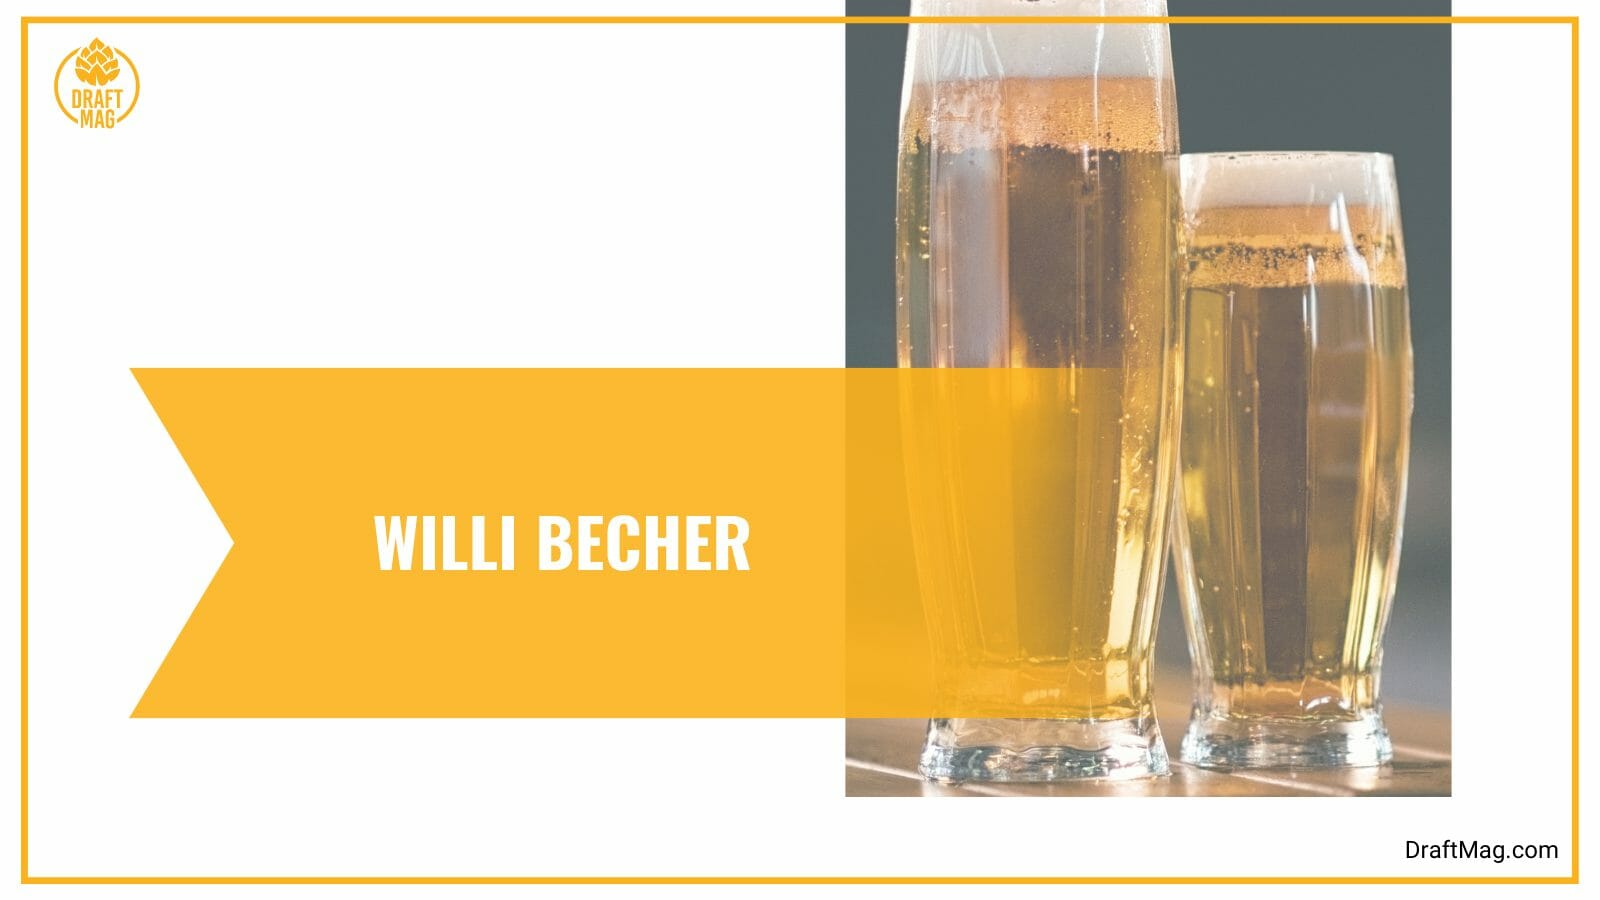 Willi becher